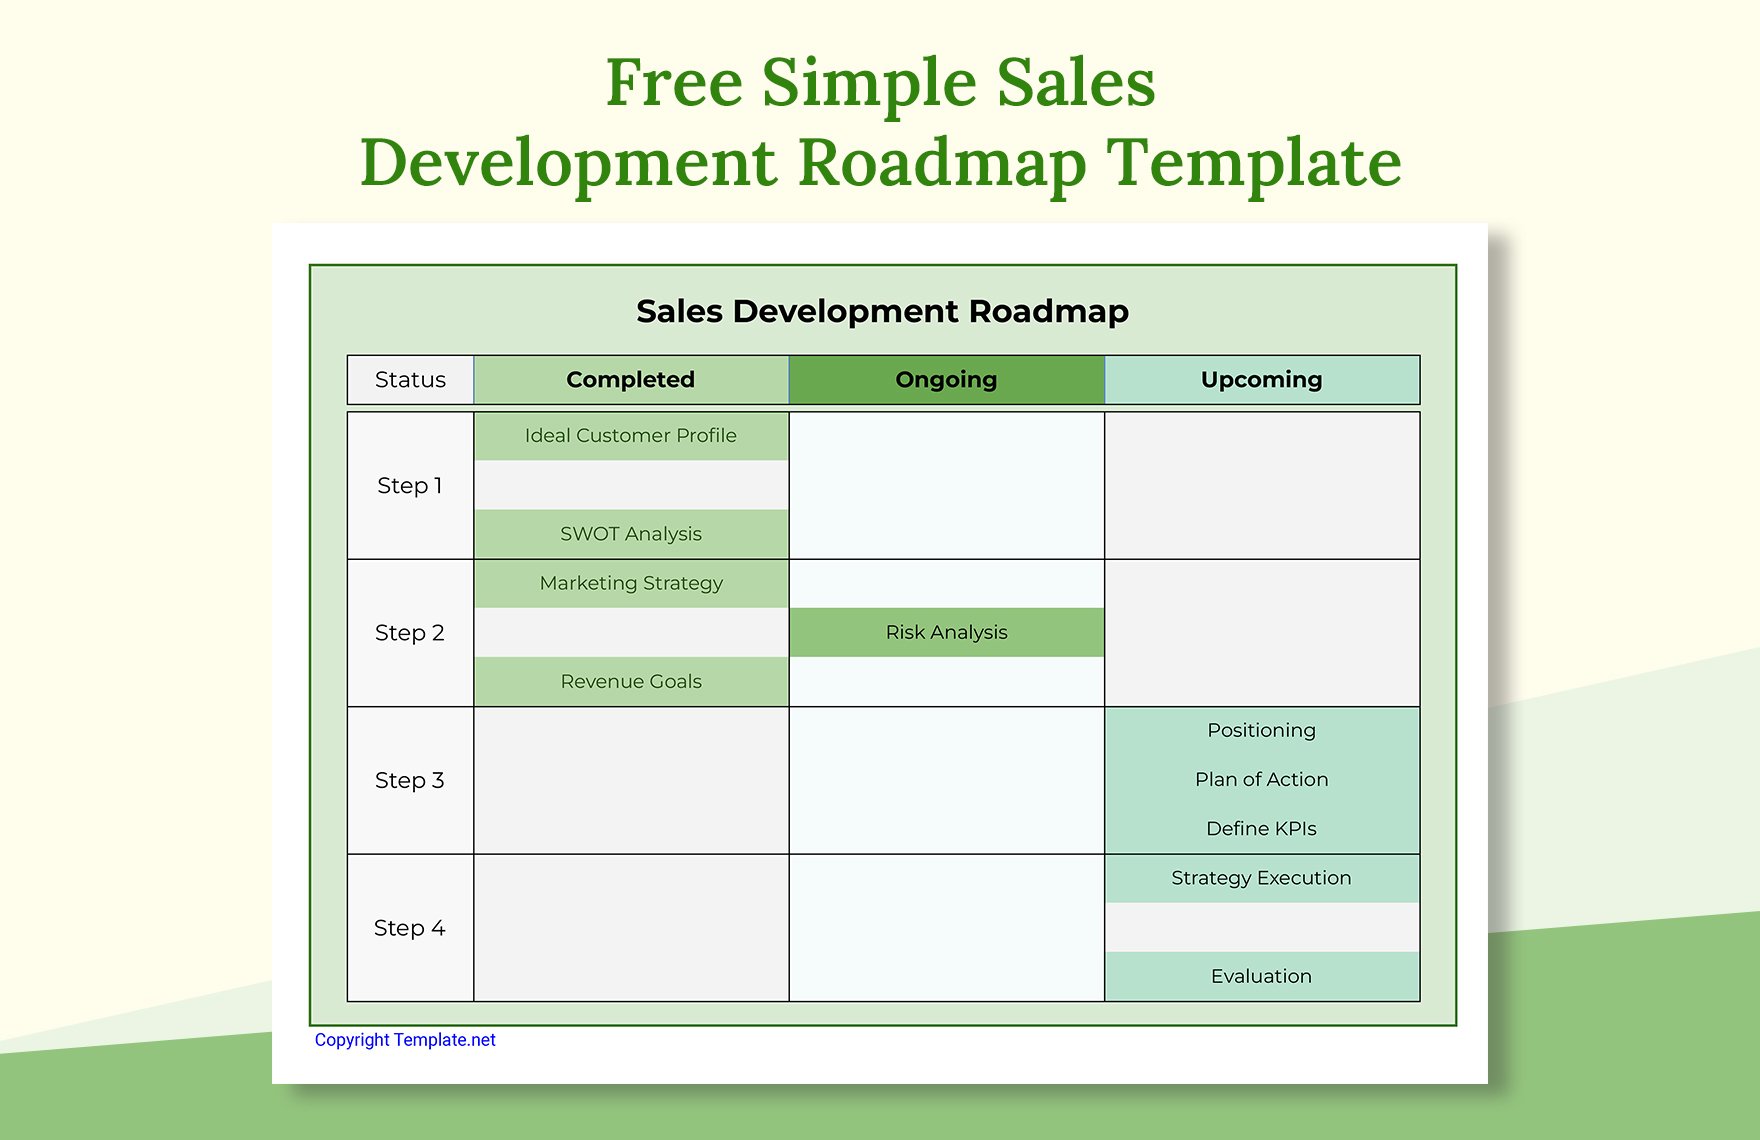 Free Simple Sales Development Roadmap Template